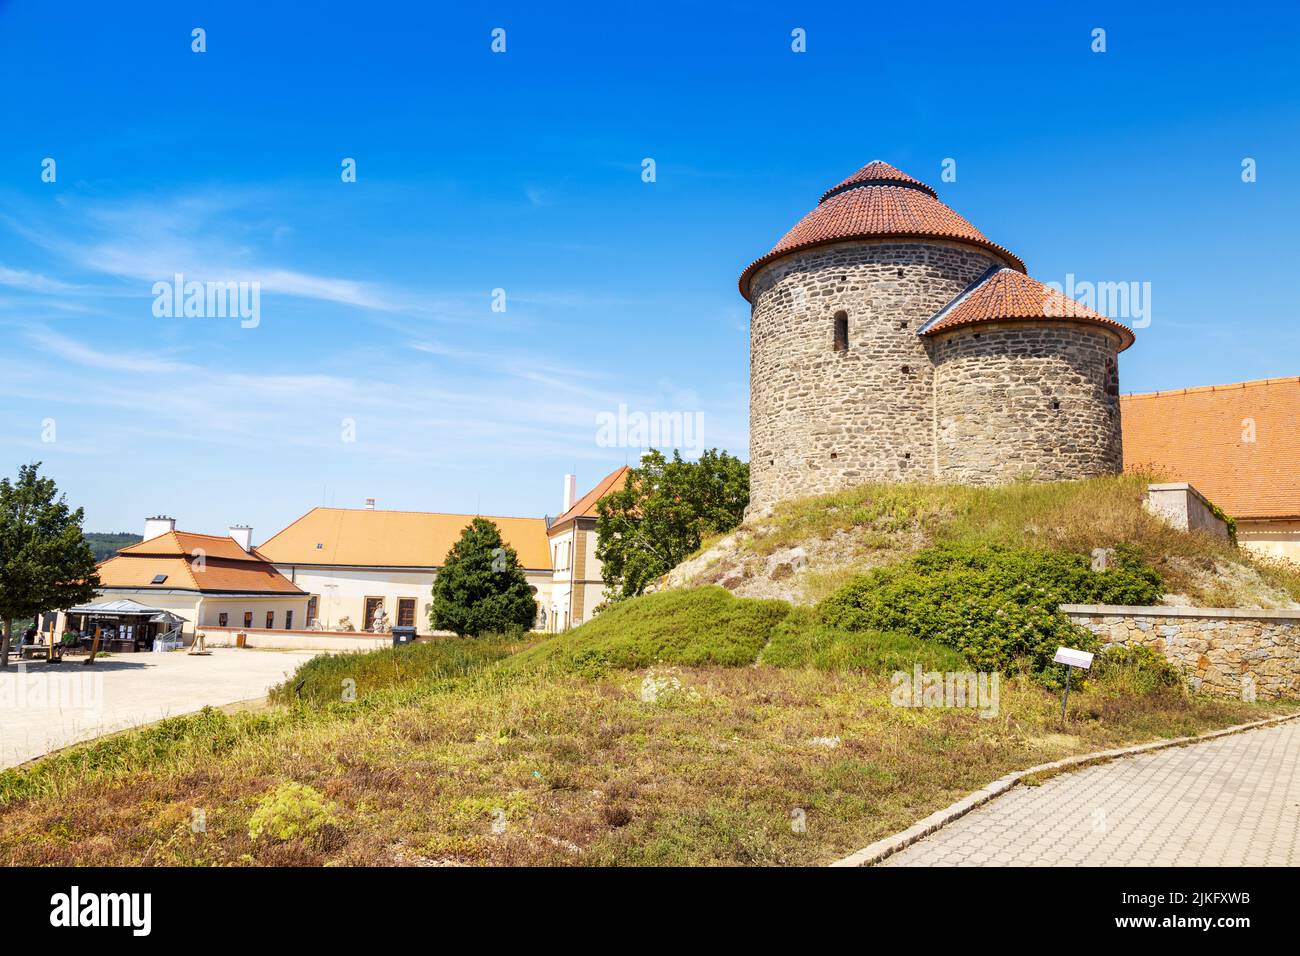 Rotunda svaté Kateřiny, Znojmo, Jihomoravský kraj, Ceska republika /  rotunda, Znojmo town, South Moravia, Czech republic Stock Photo